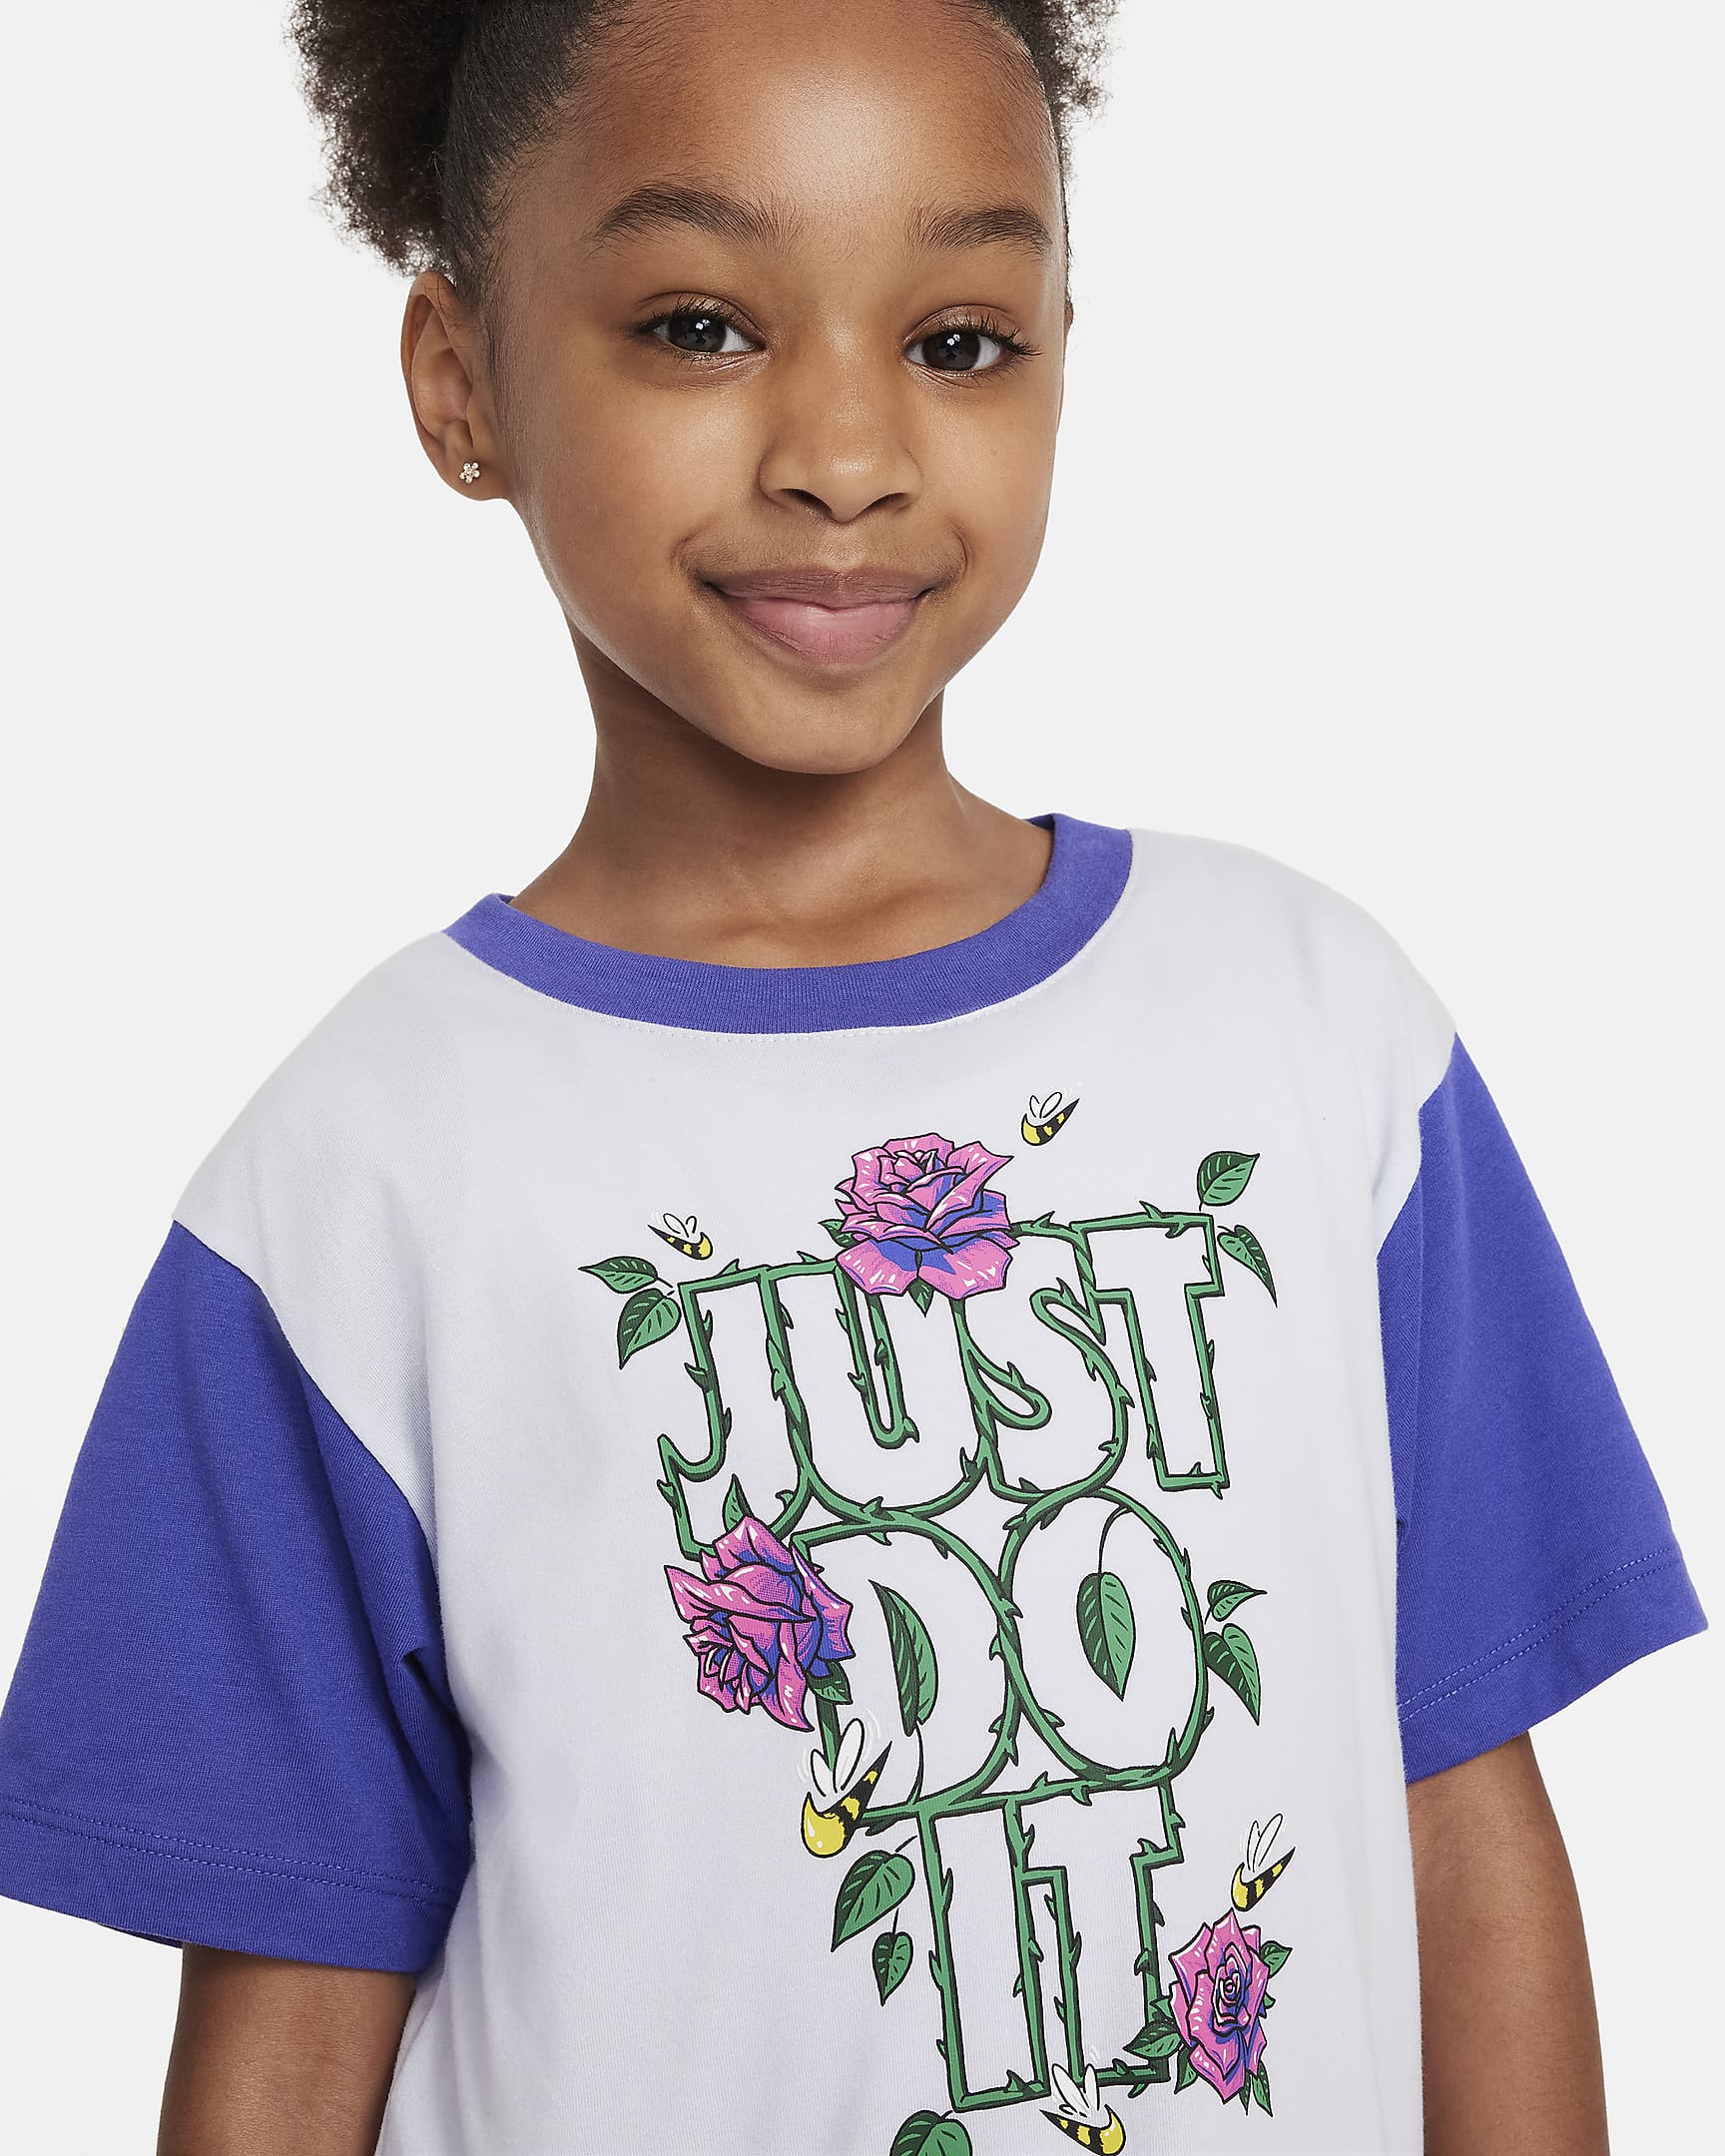 Nike Little Kids' Graphic Tee Dress. Nike.com